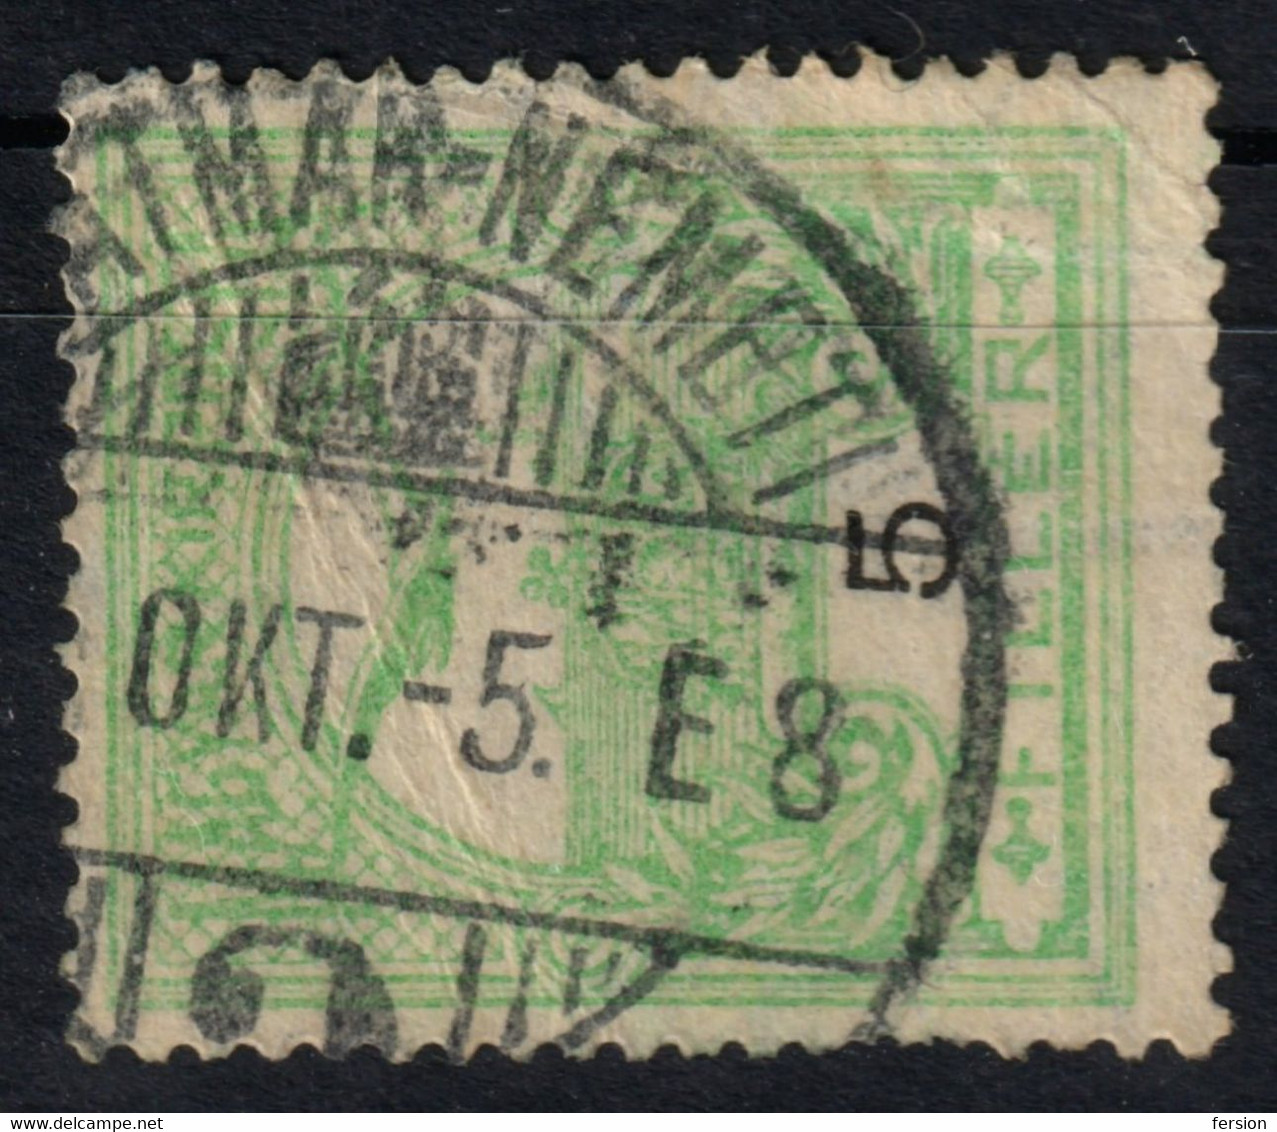 Satu Mare Szatmárnémeti Postmark / TURUL Crown 1910's Hungary Romania Transylvania Szatmár County KuK - 5 Fill - Transylvania